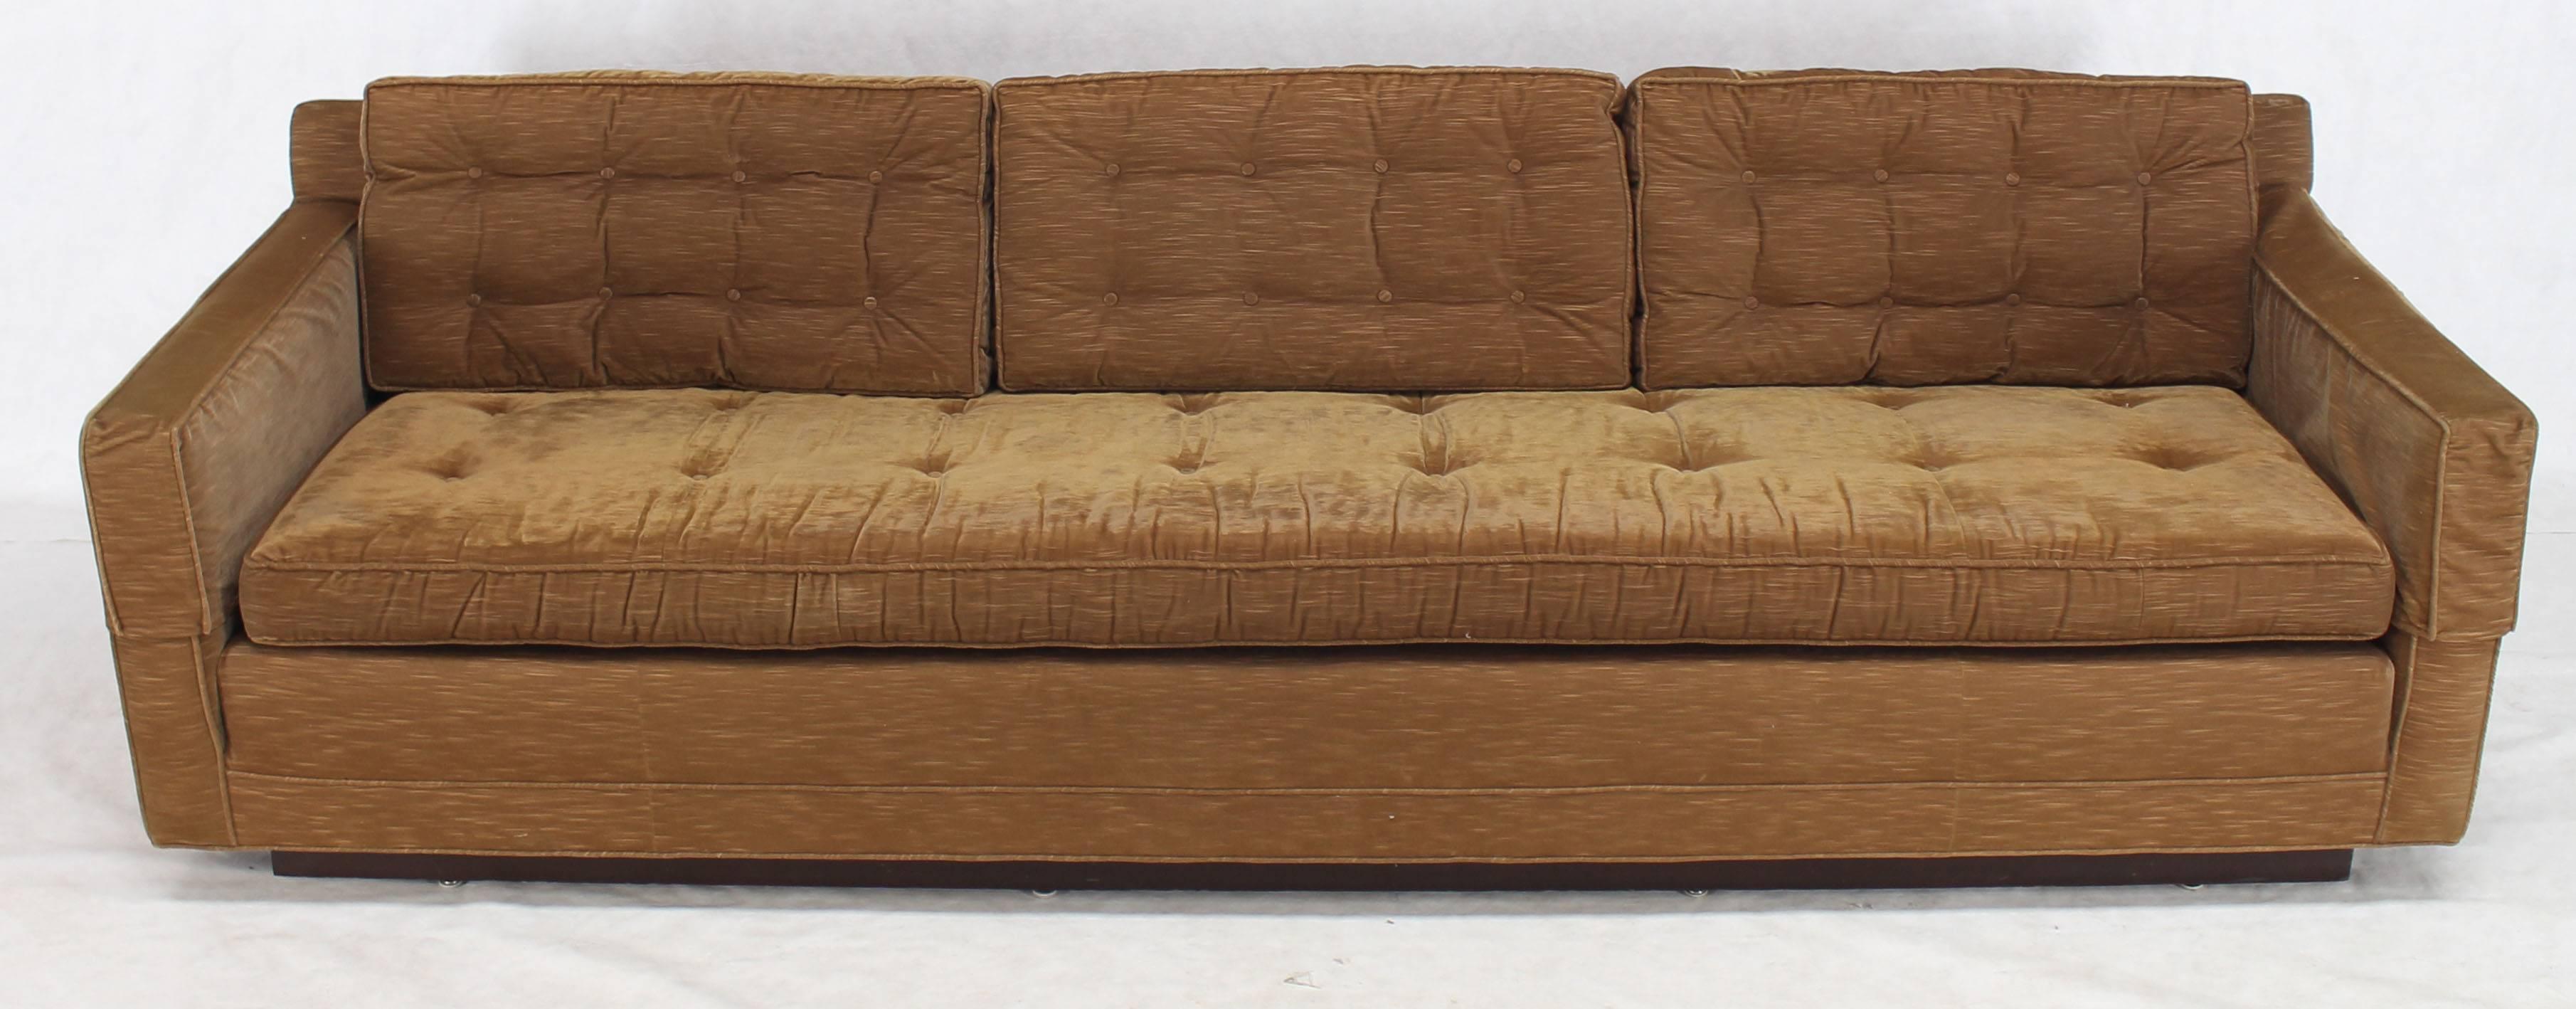 Long angular design Mid-Century Modern design base light coffee color sofa.